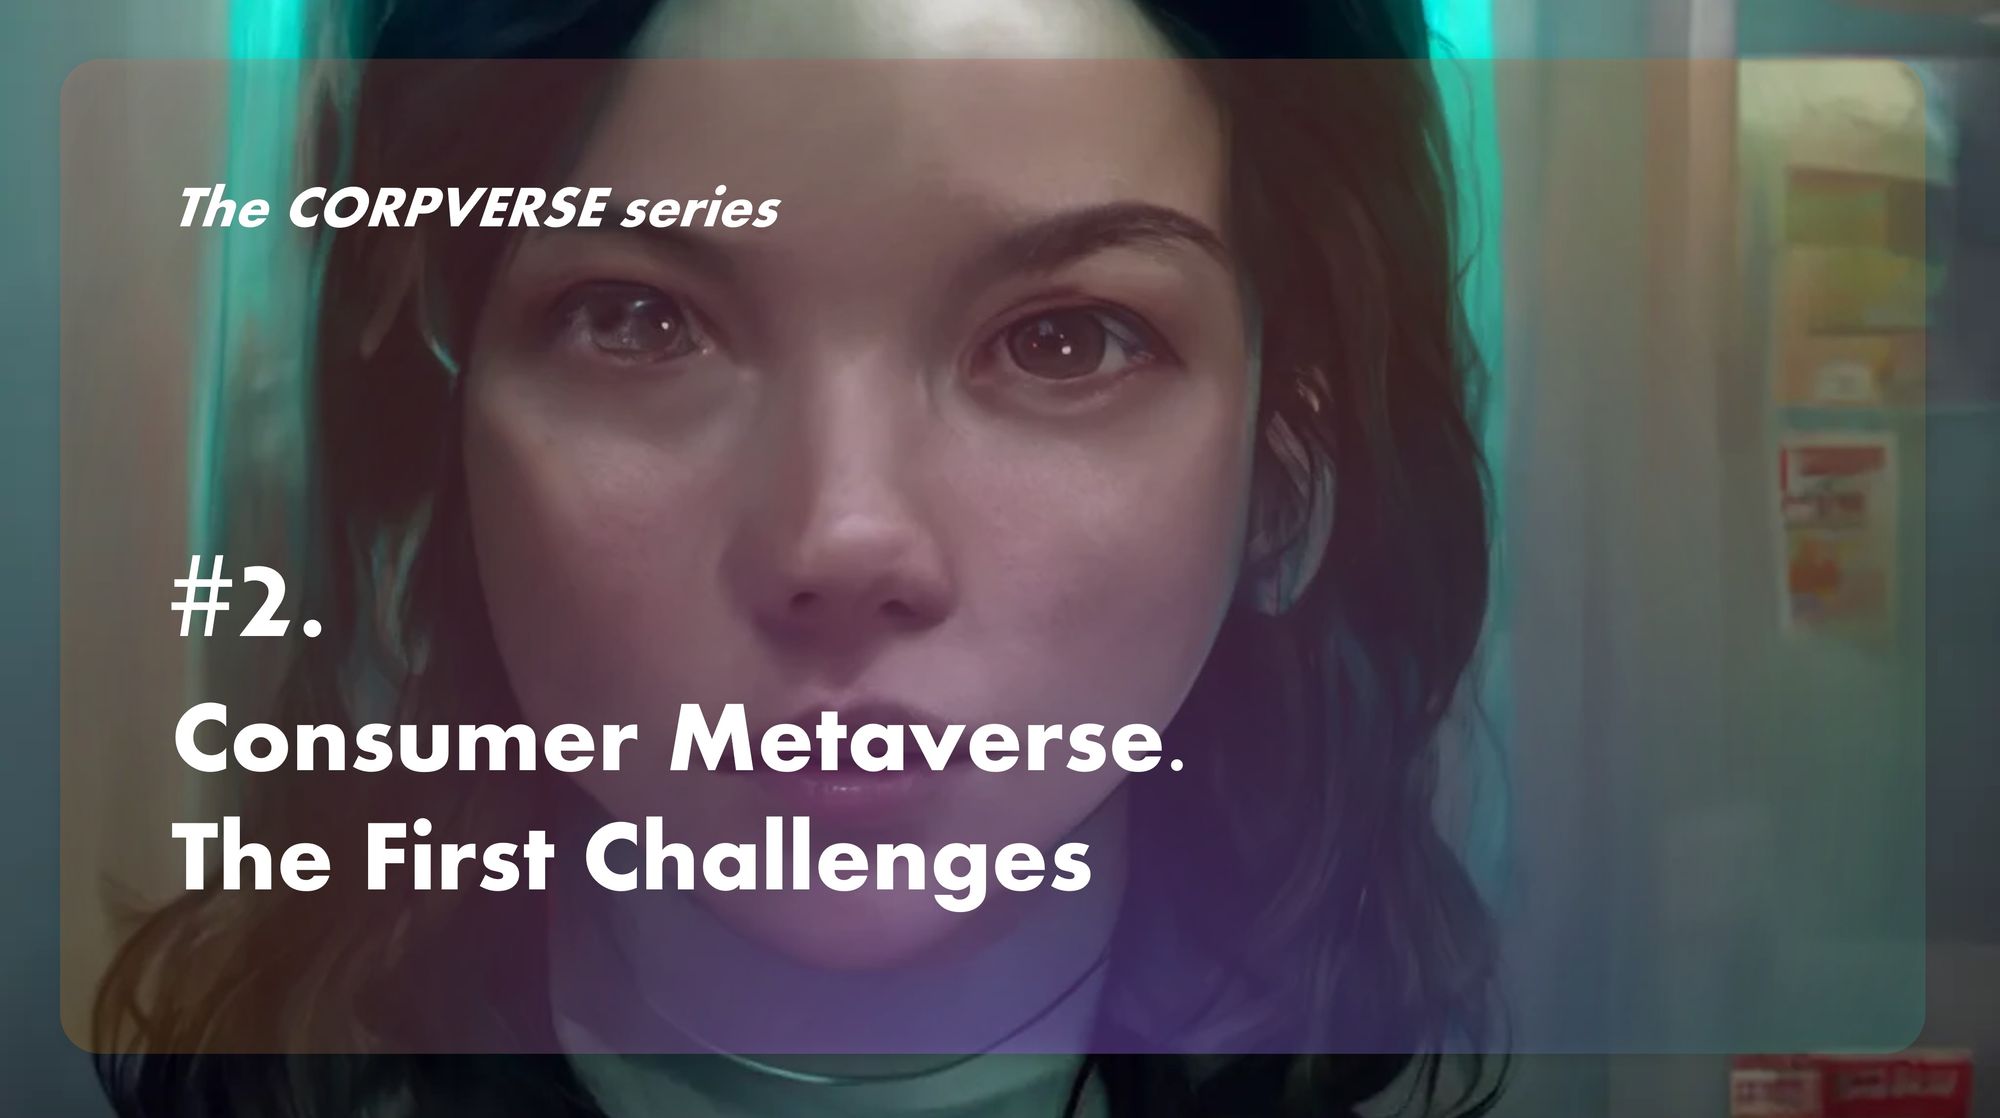 🧊 Corpverse #2. Consumer Metaverse. The First Challenges (Первые вызовы)